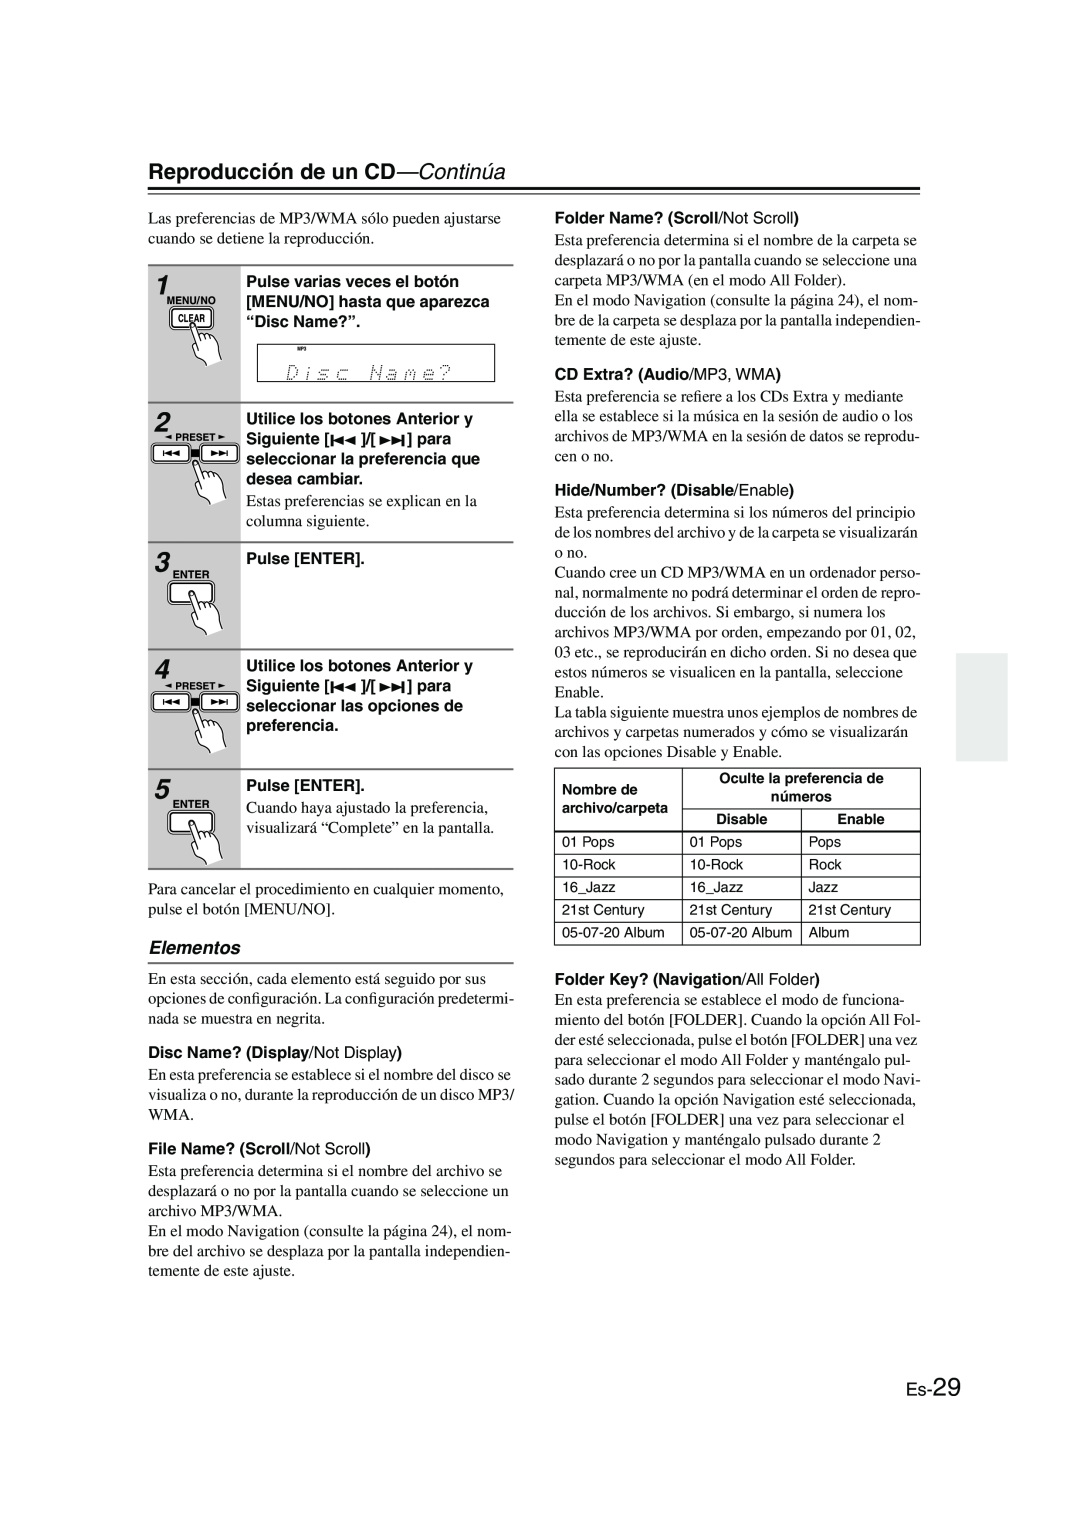 Onkyo CBX-300 instruction manual Elementos, Es-29, Reproducción de un CD—Continúa 